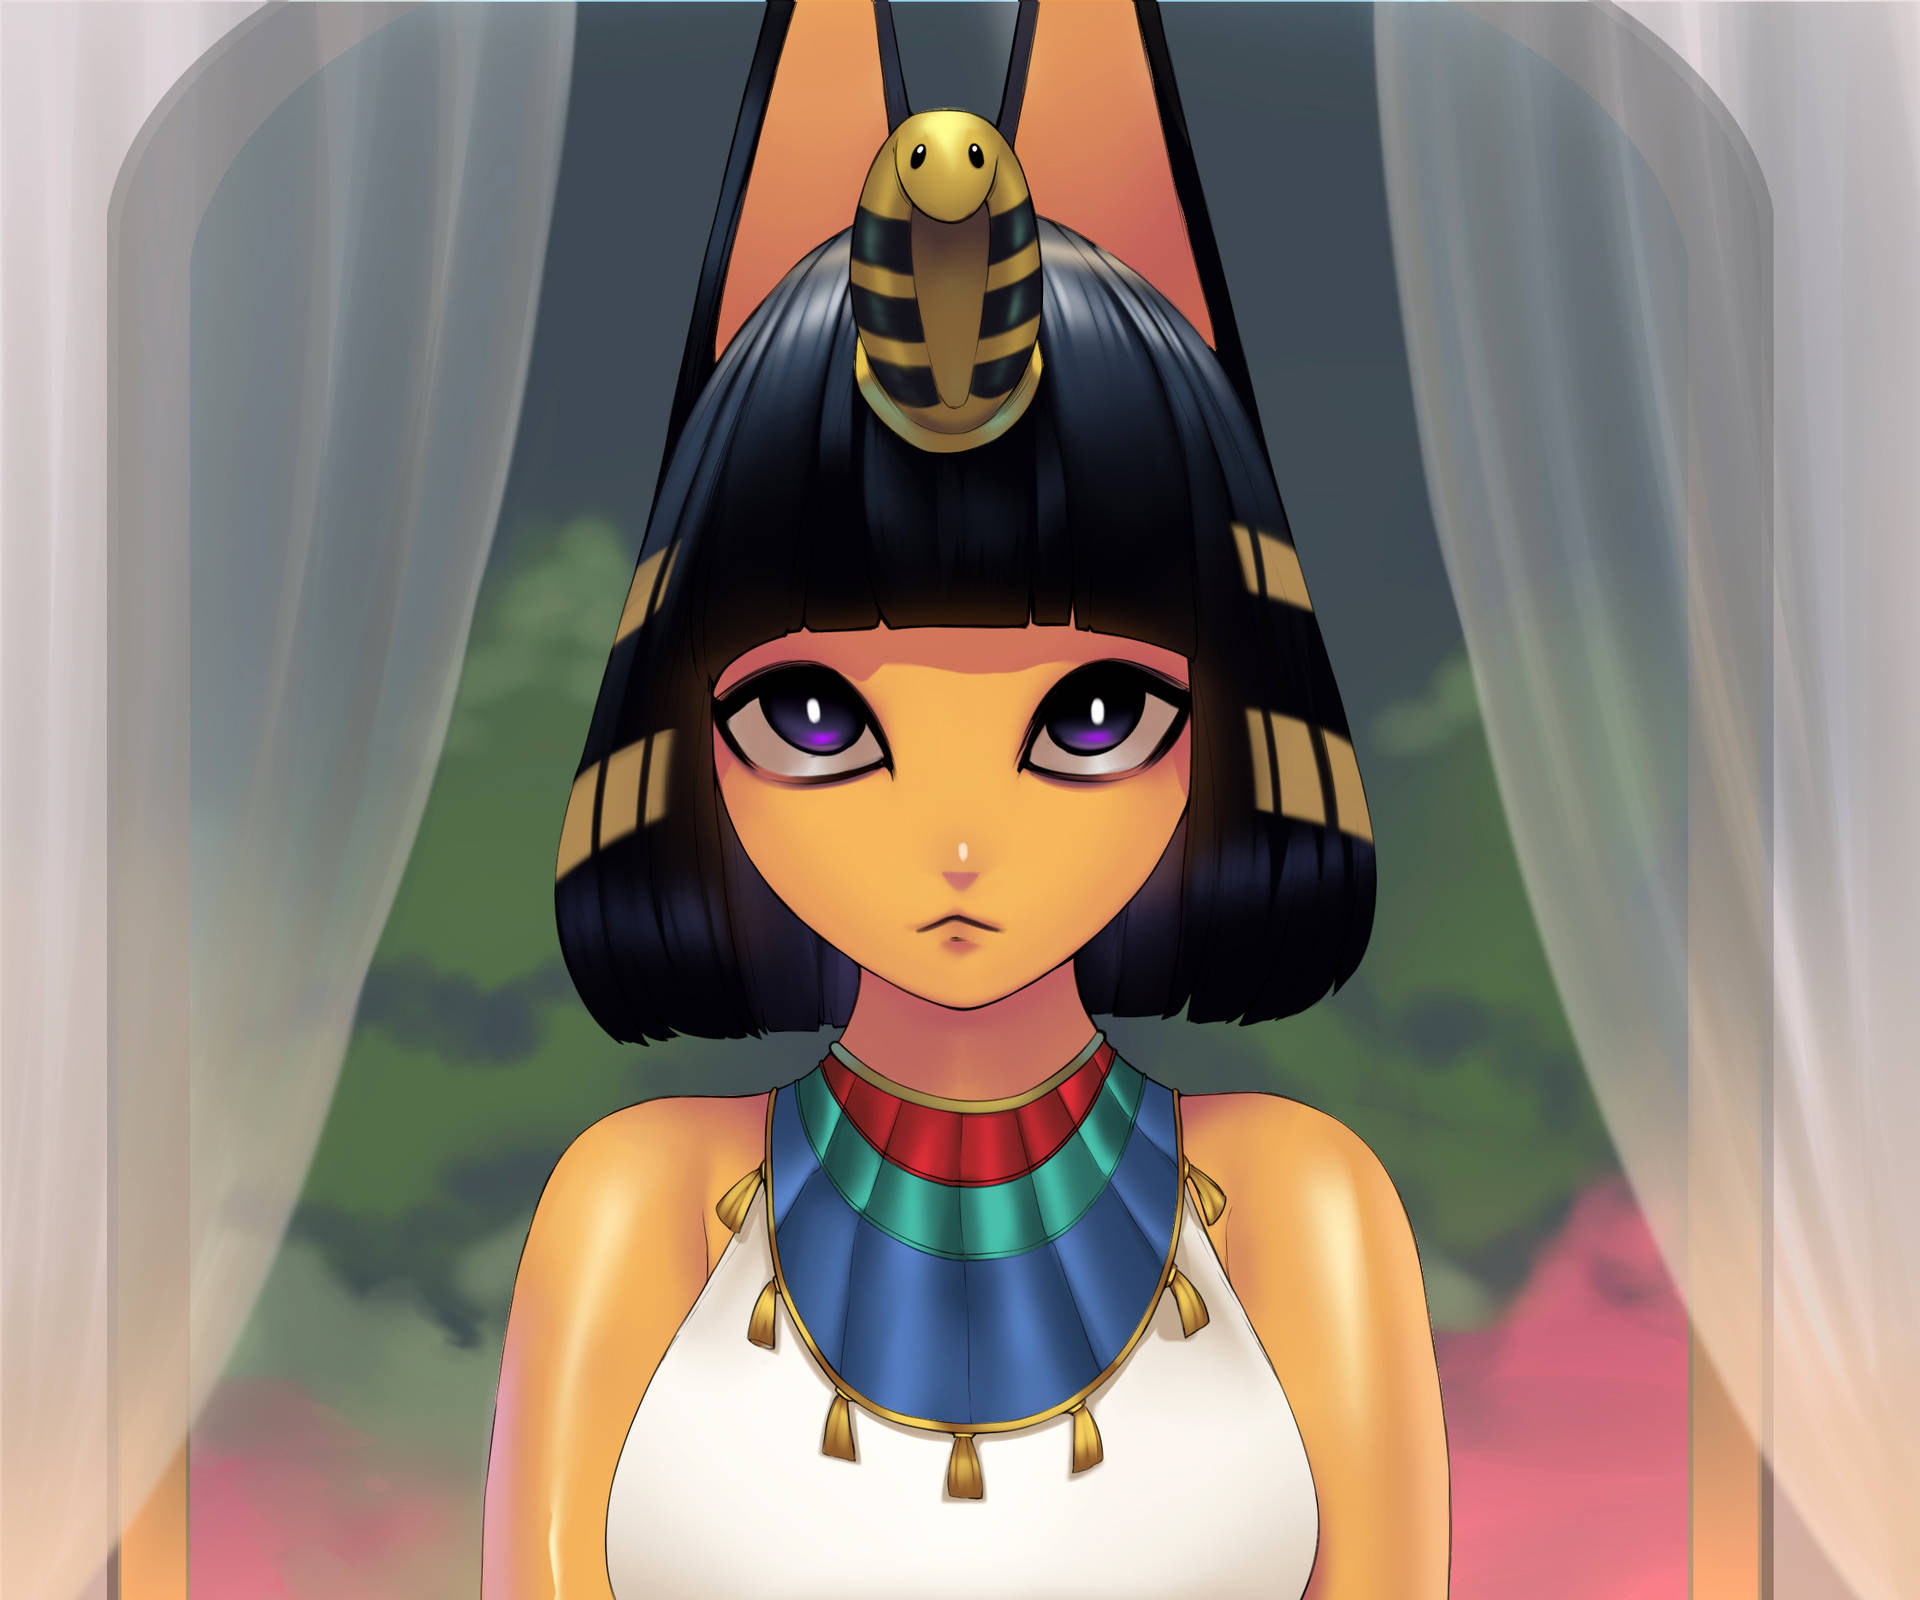 Ankha, den elskede Animal Crossing-karakter, genskabt som en magtfuld egyptisk dronning. Wallpaper